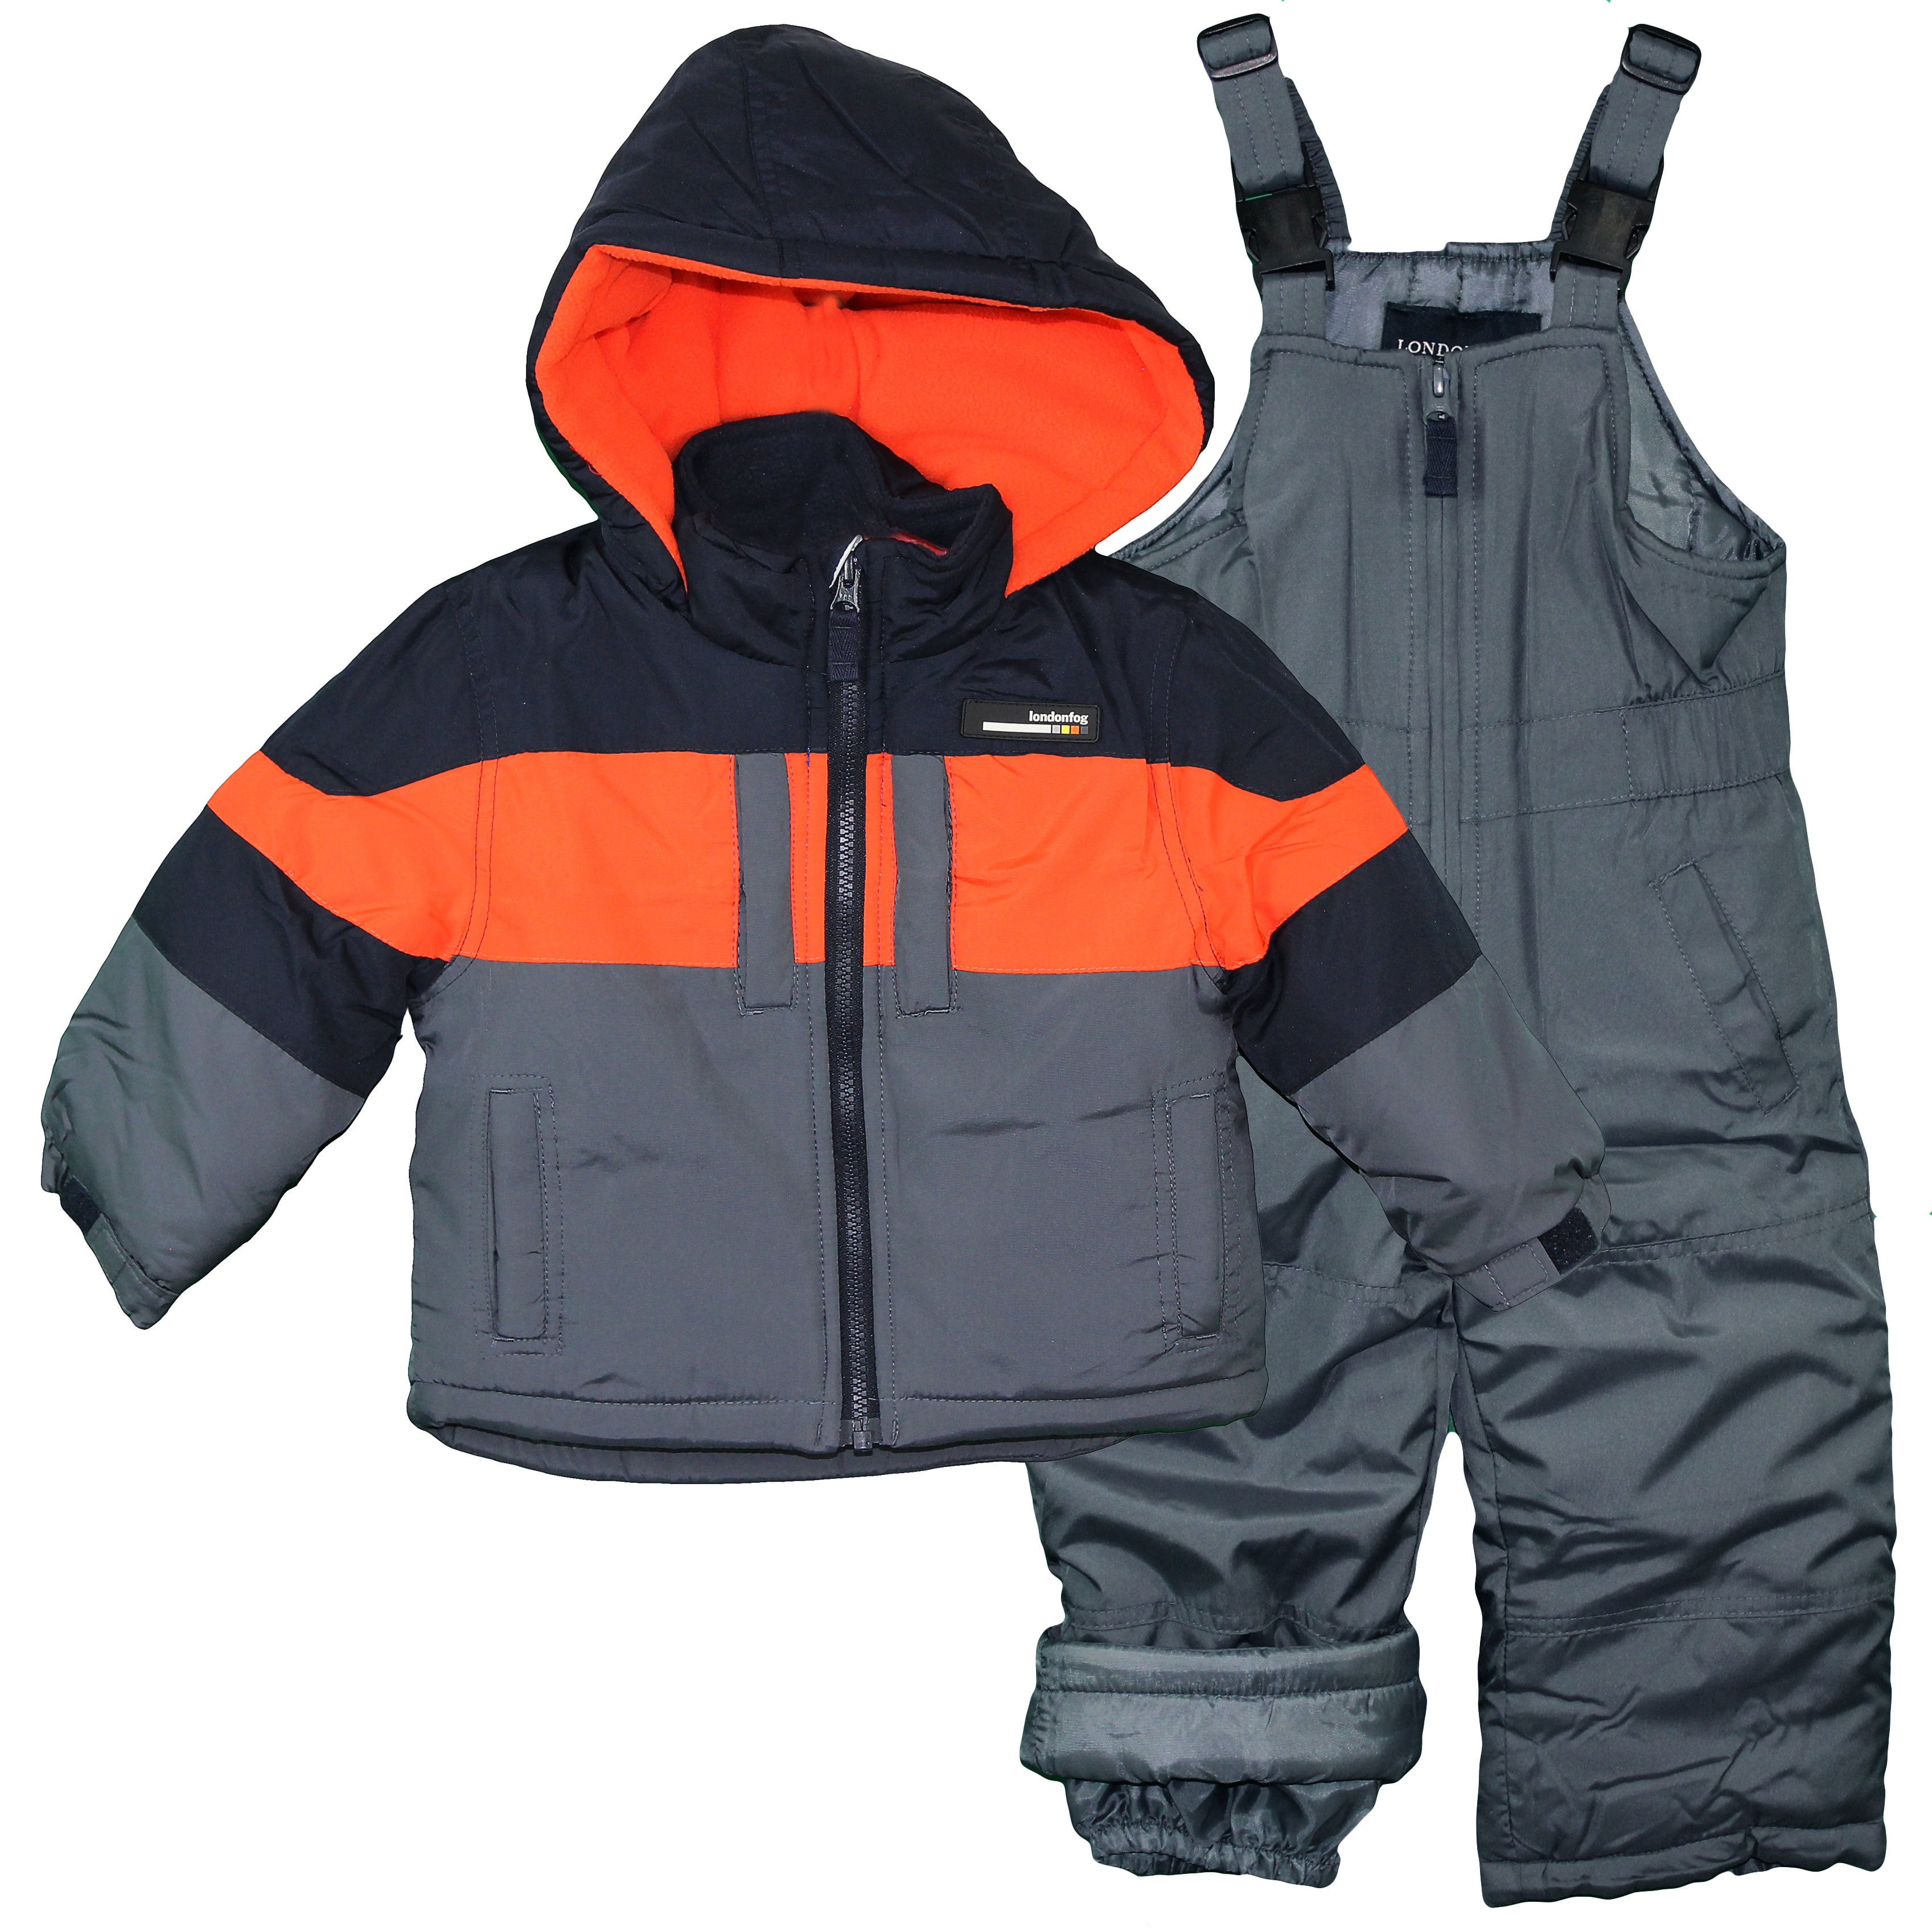 Infant & Toddler Boys London Fog Assorted Jackets Size 18 Months 3T 